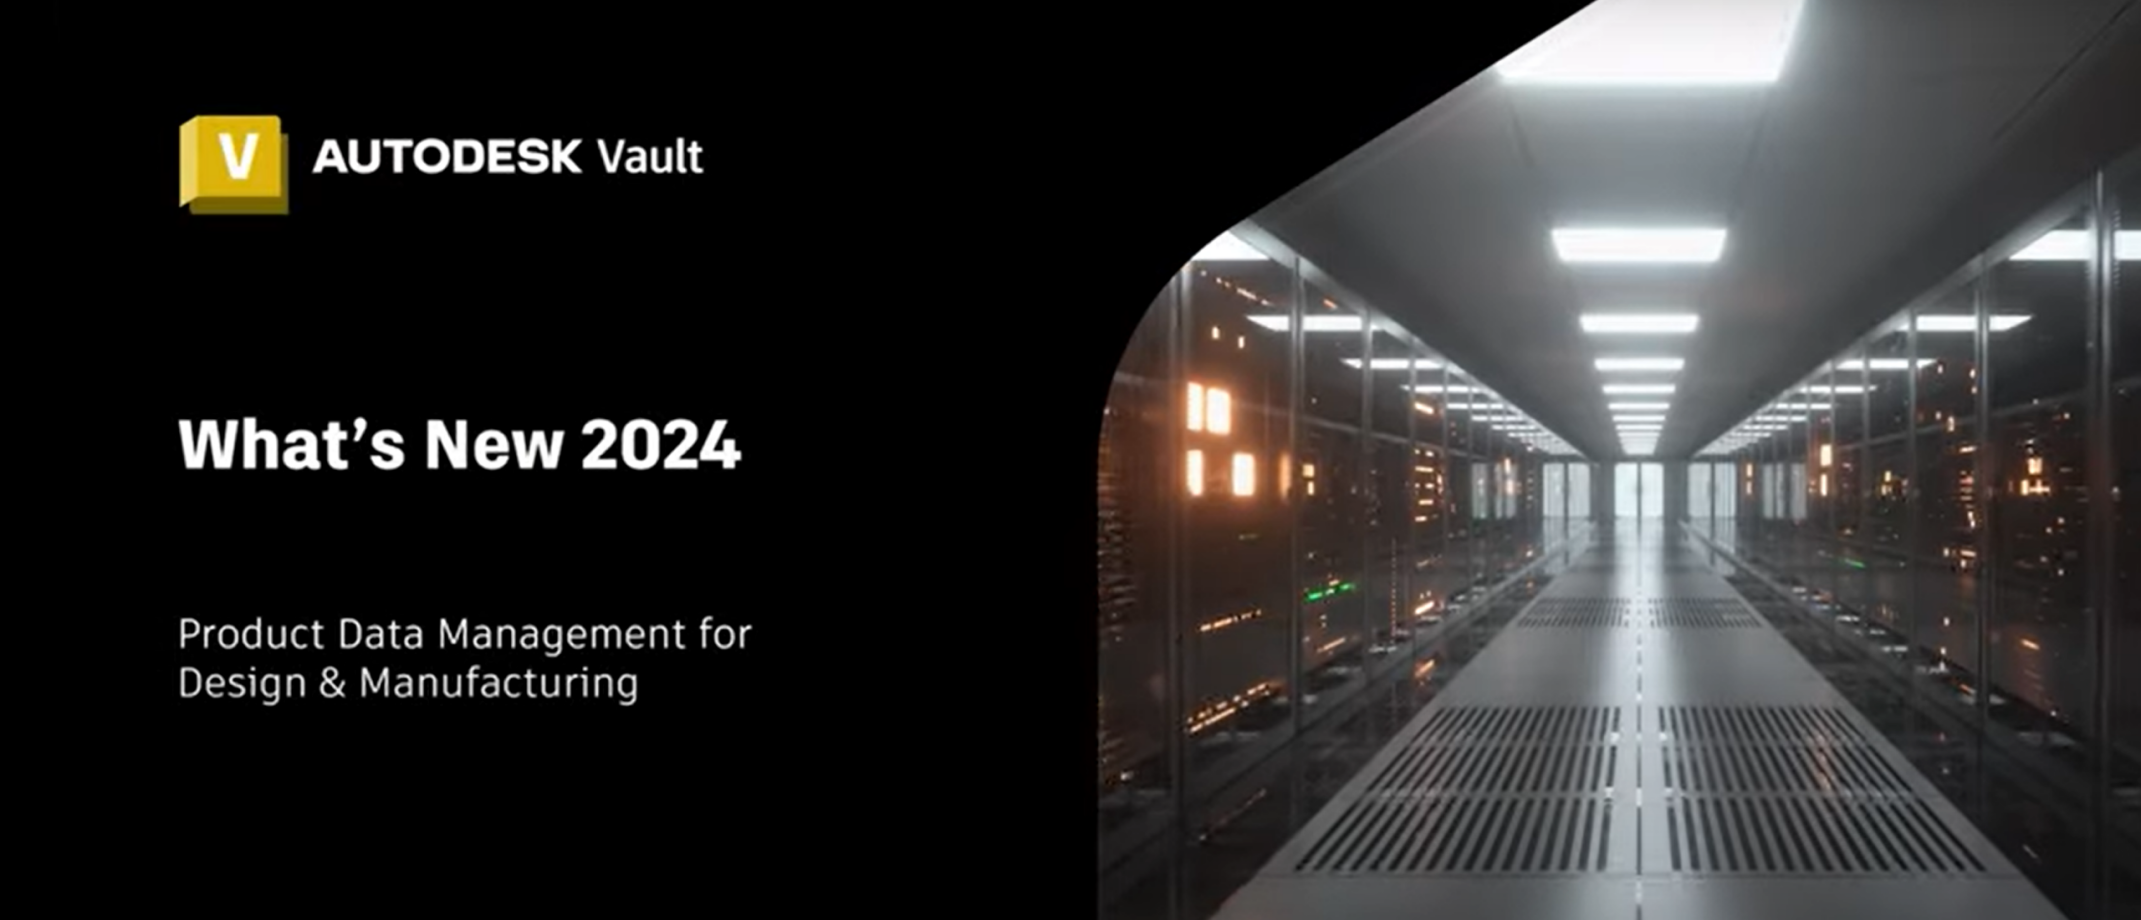 Autodesk Vault 2024 Whats new?